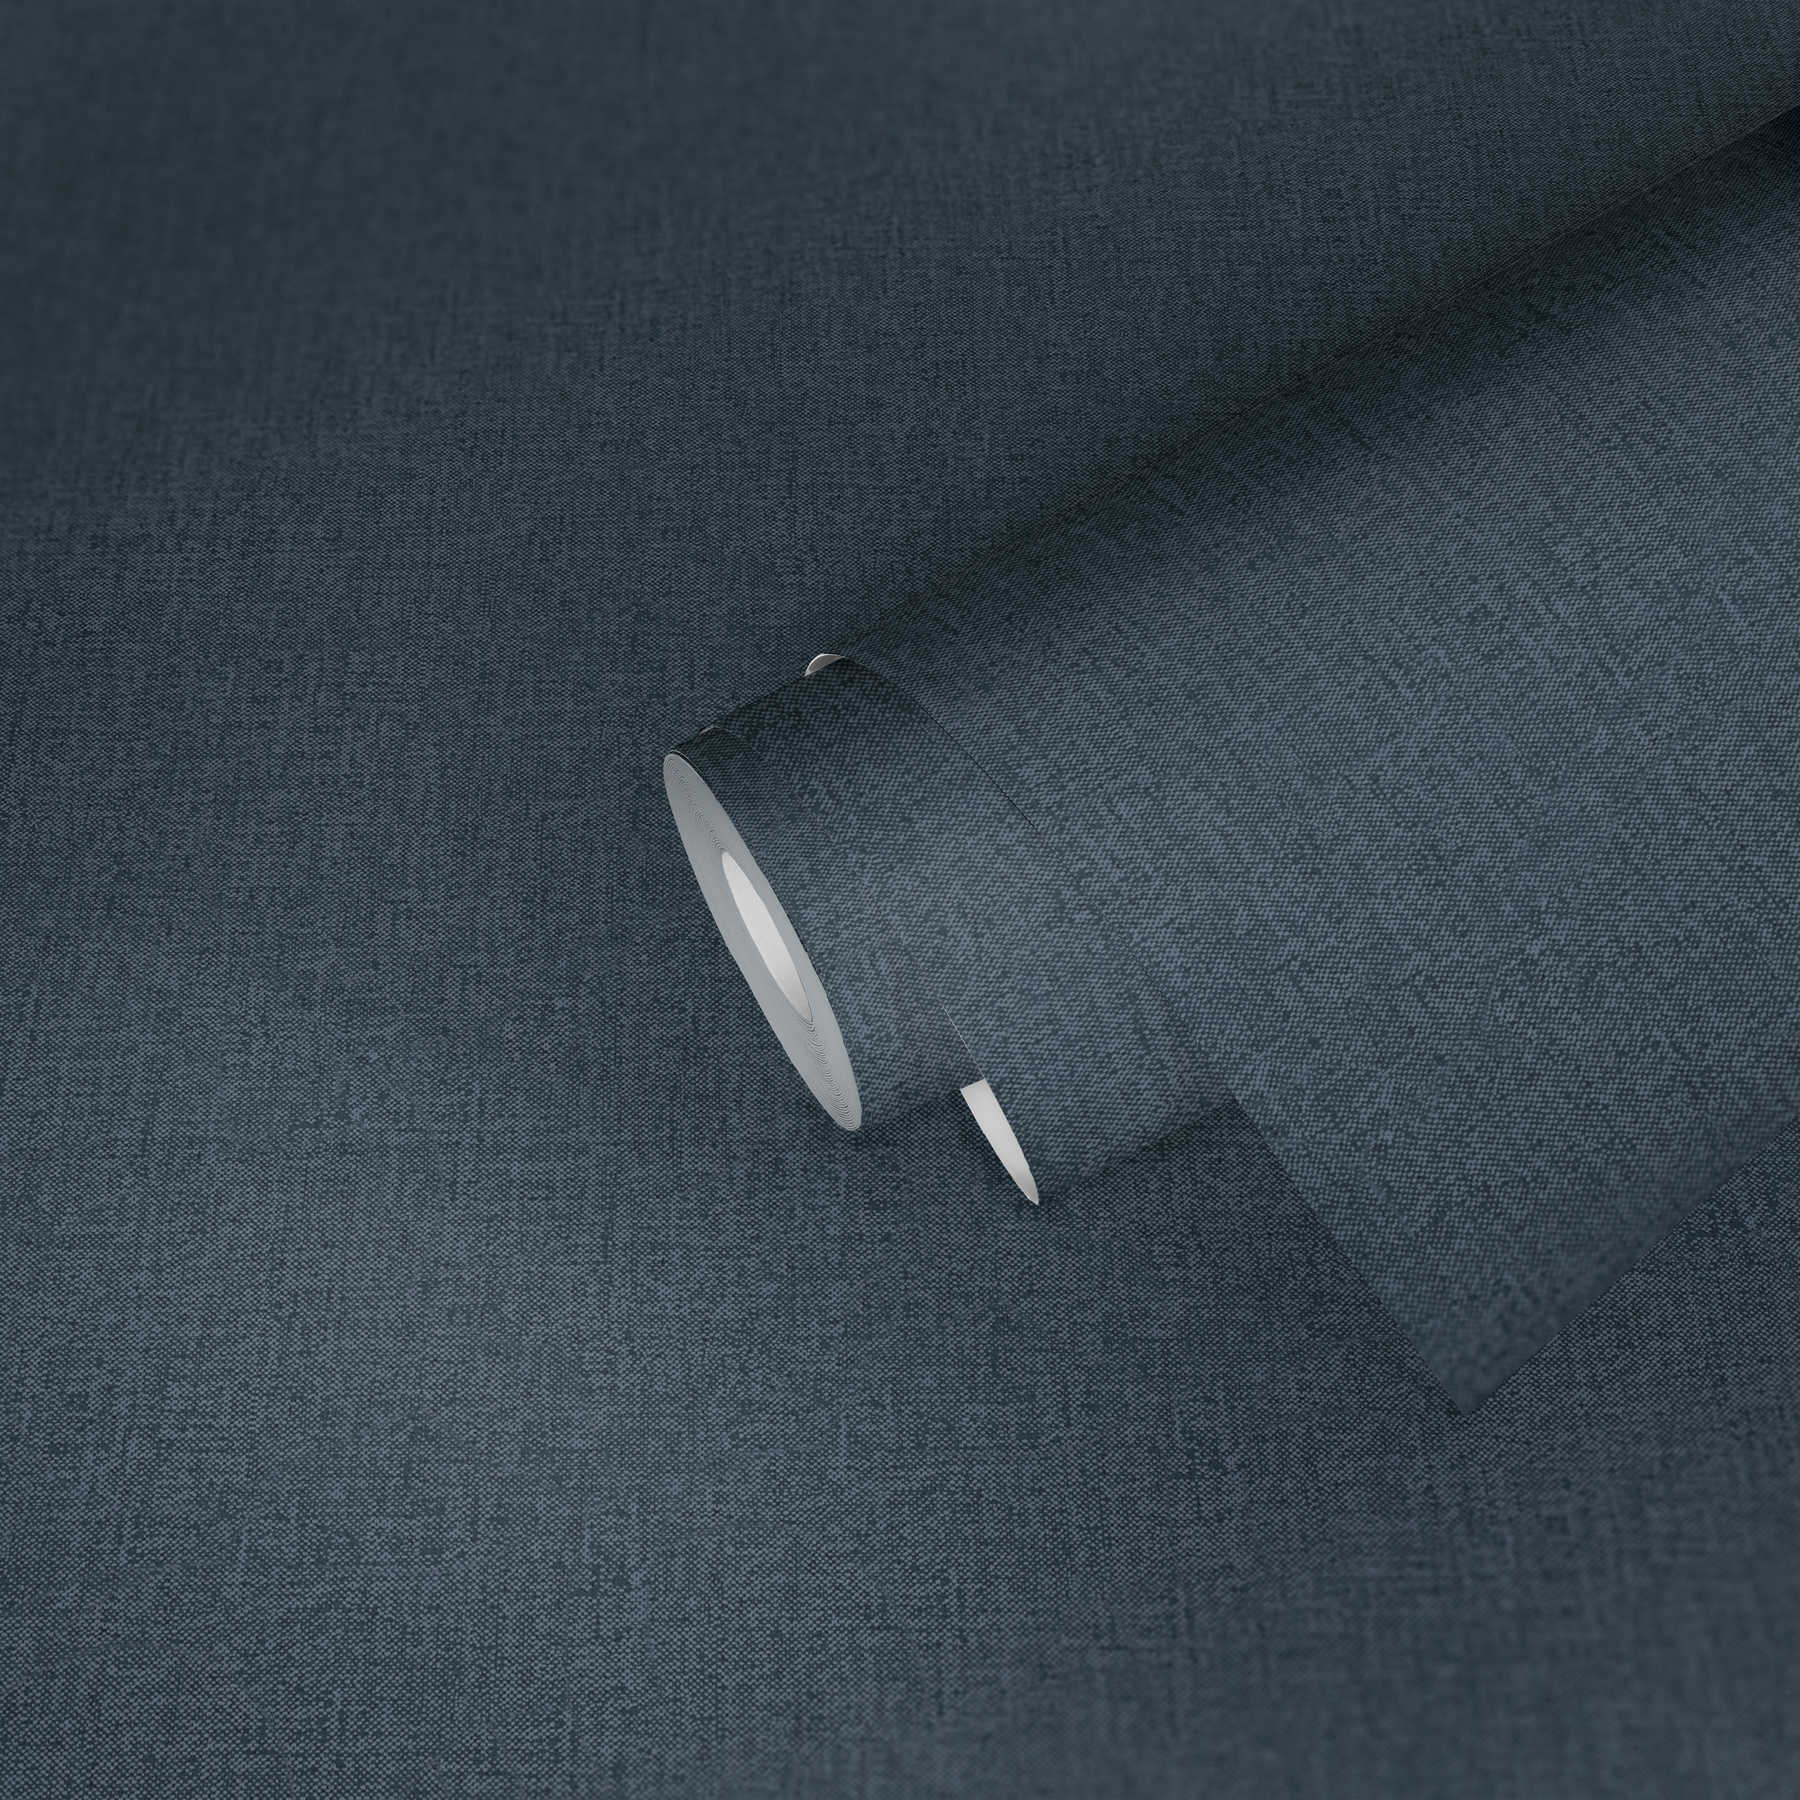             Carta da parati effetto tessuto jeans blu con struttura in tessuto - blu
        